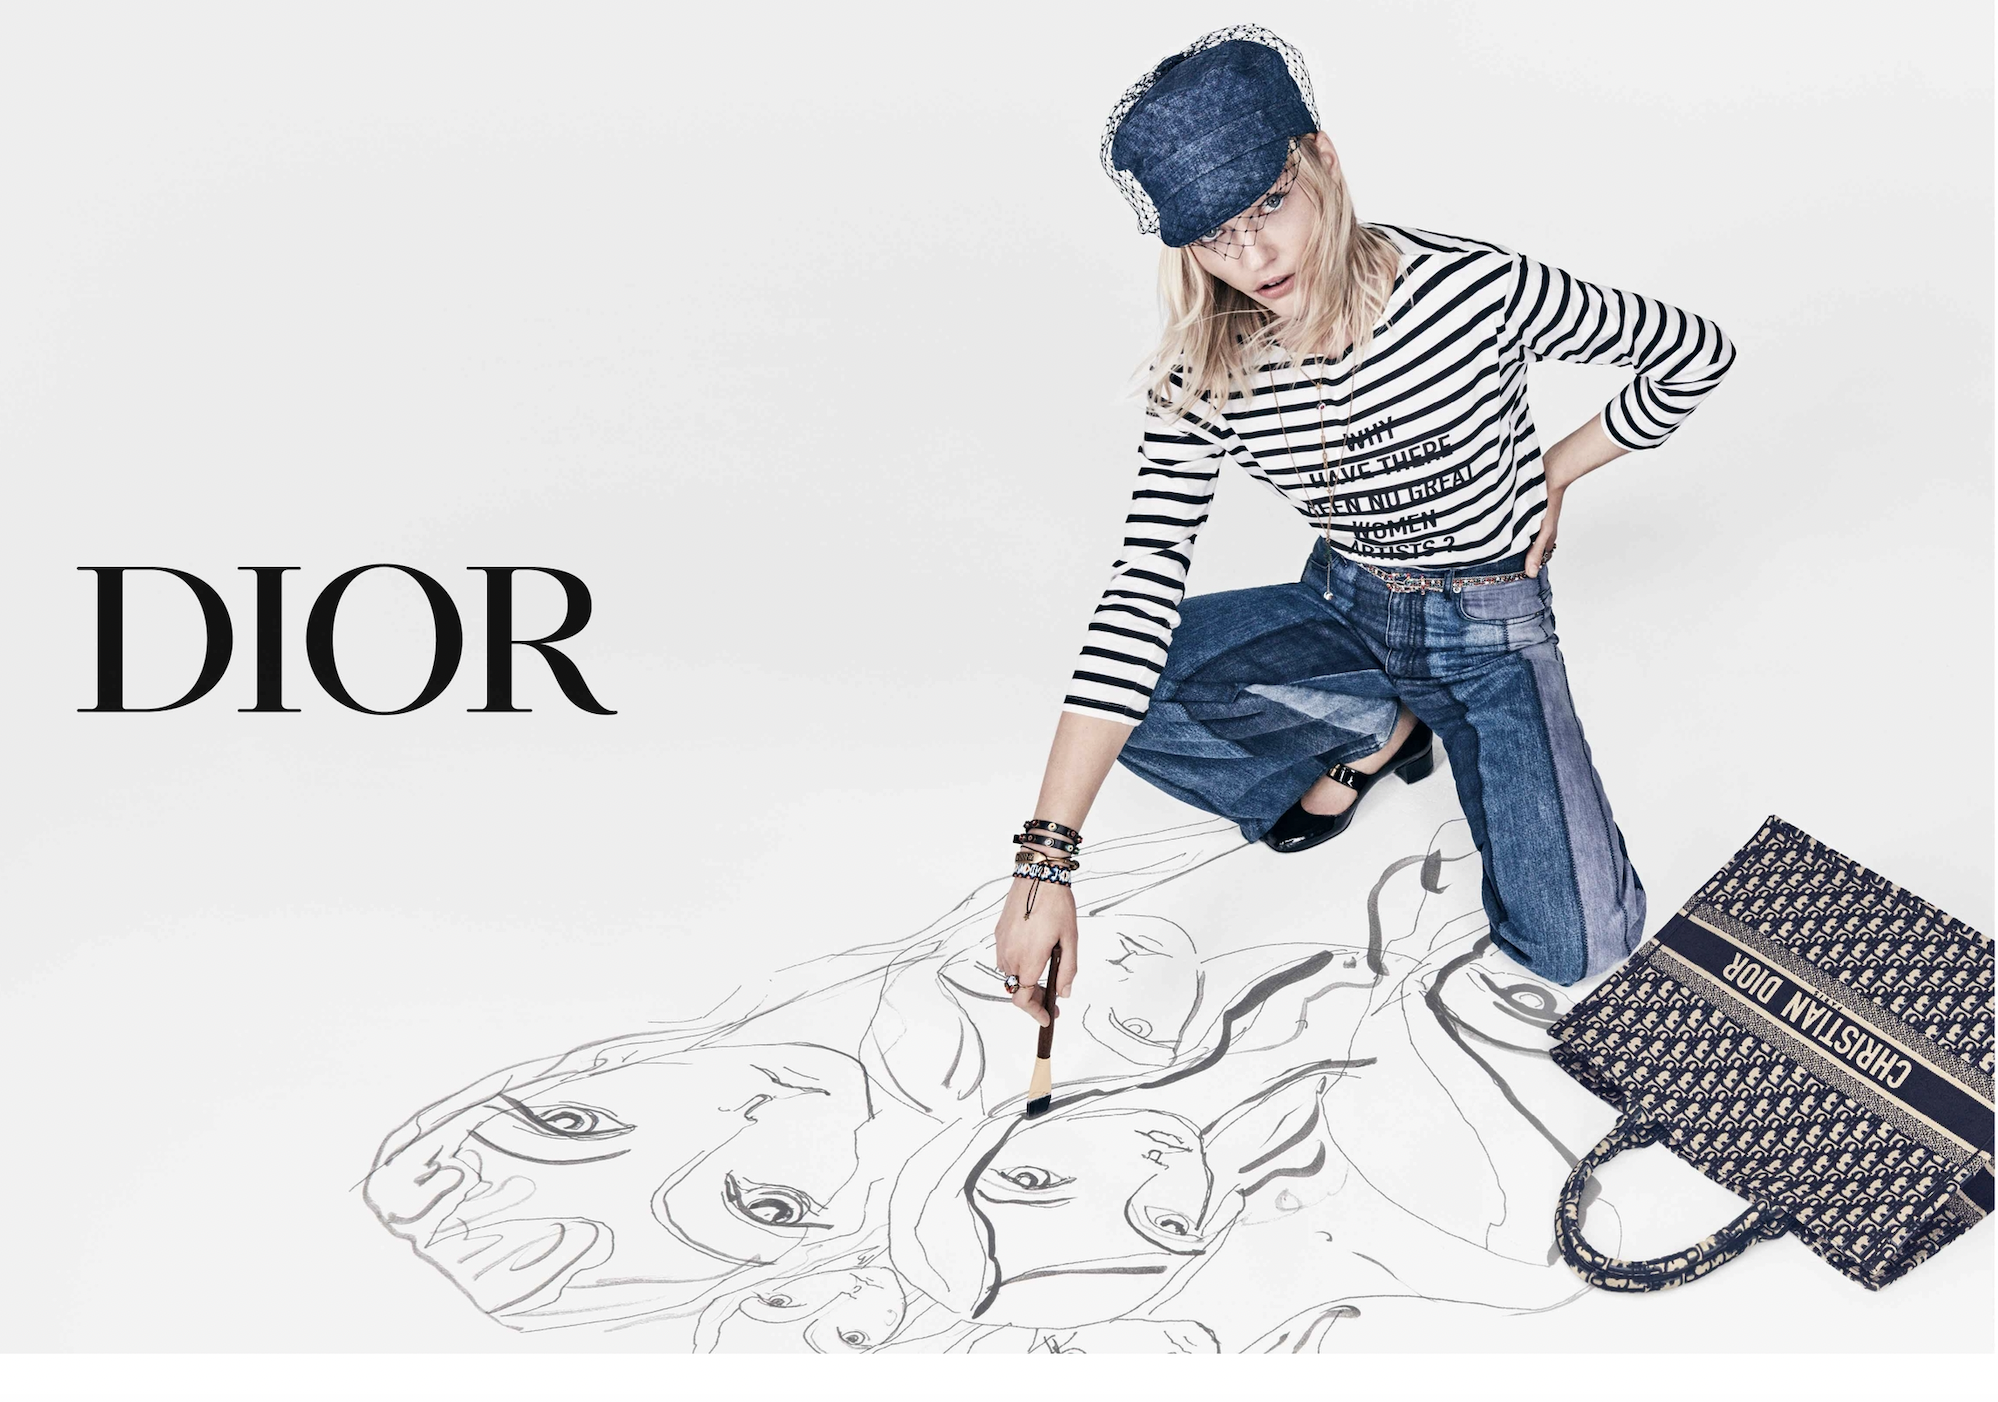 Bushido Labels - Christian Dior x V&A tote bag, Brand new